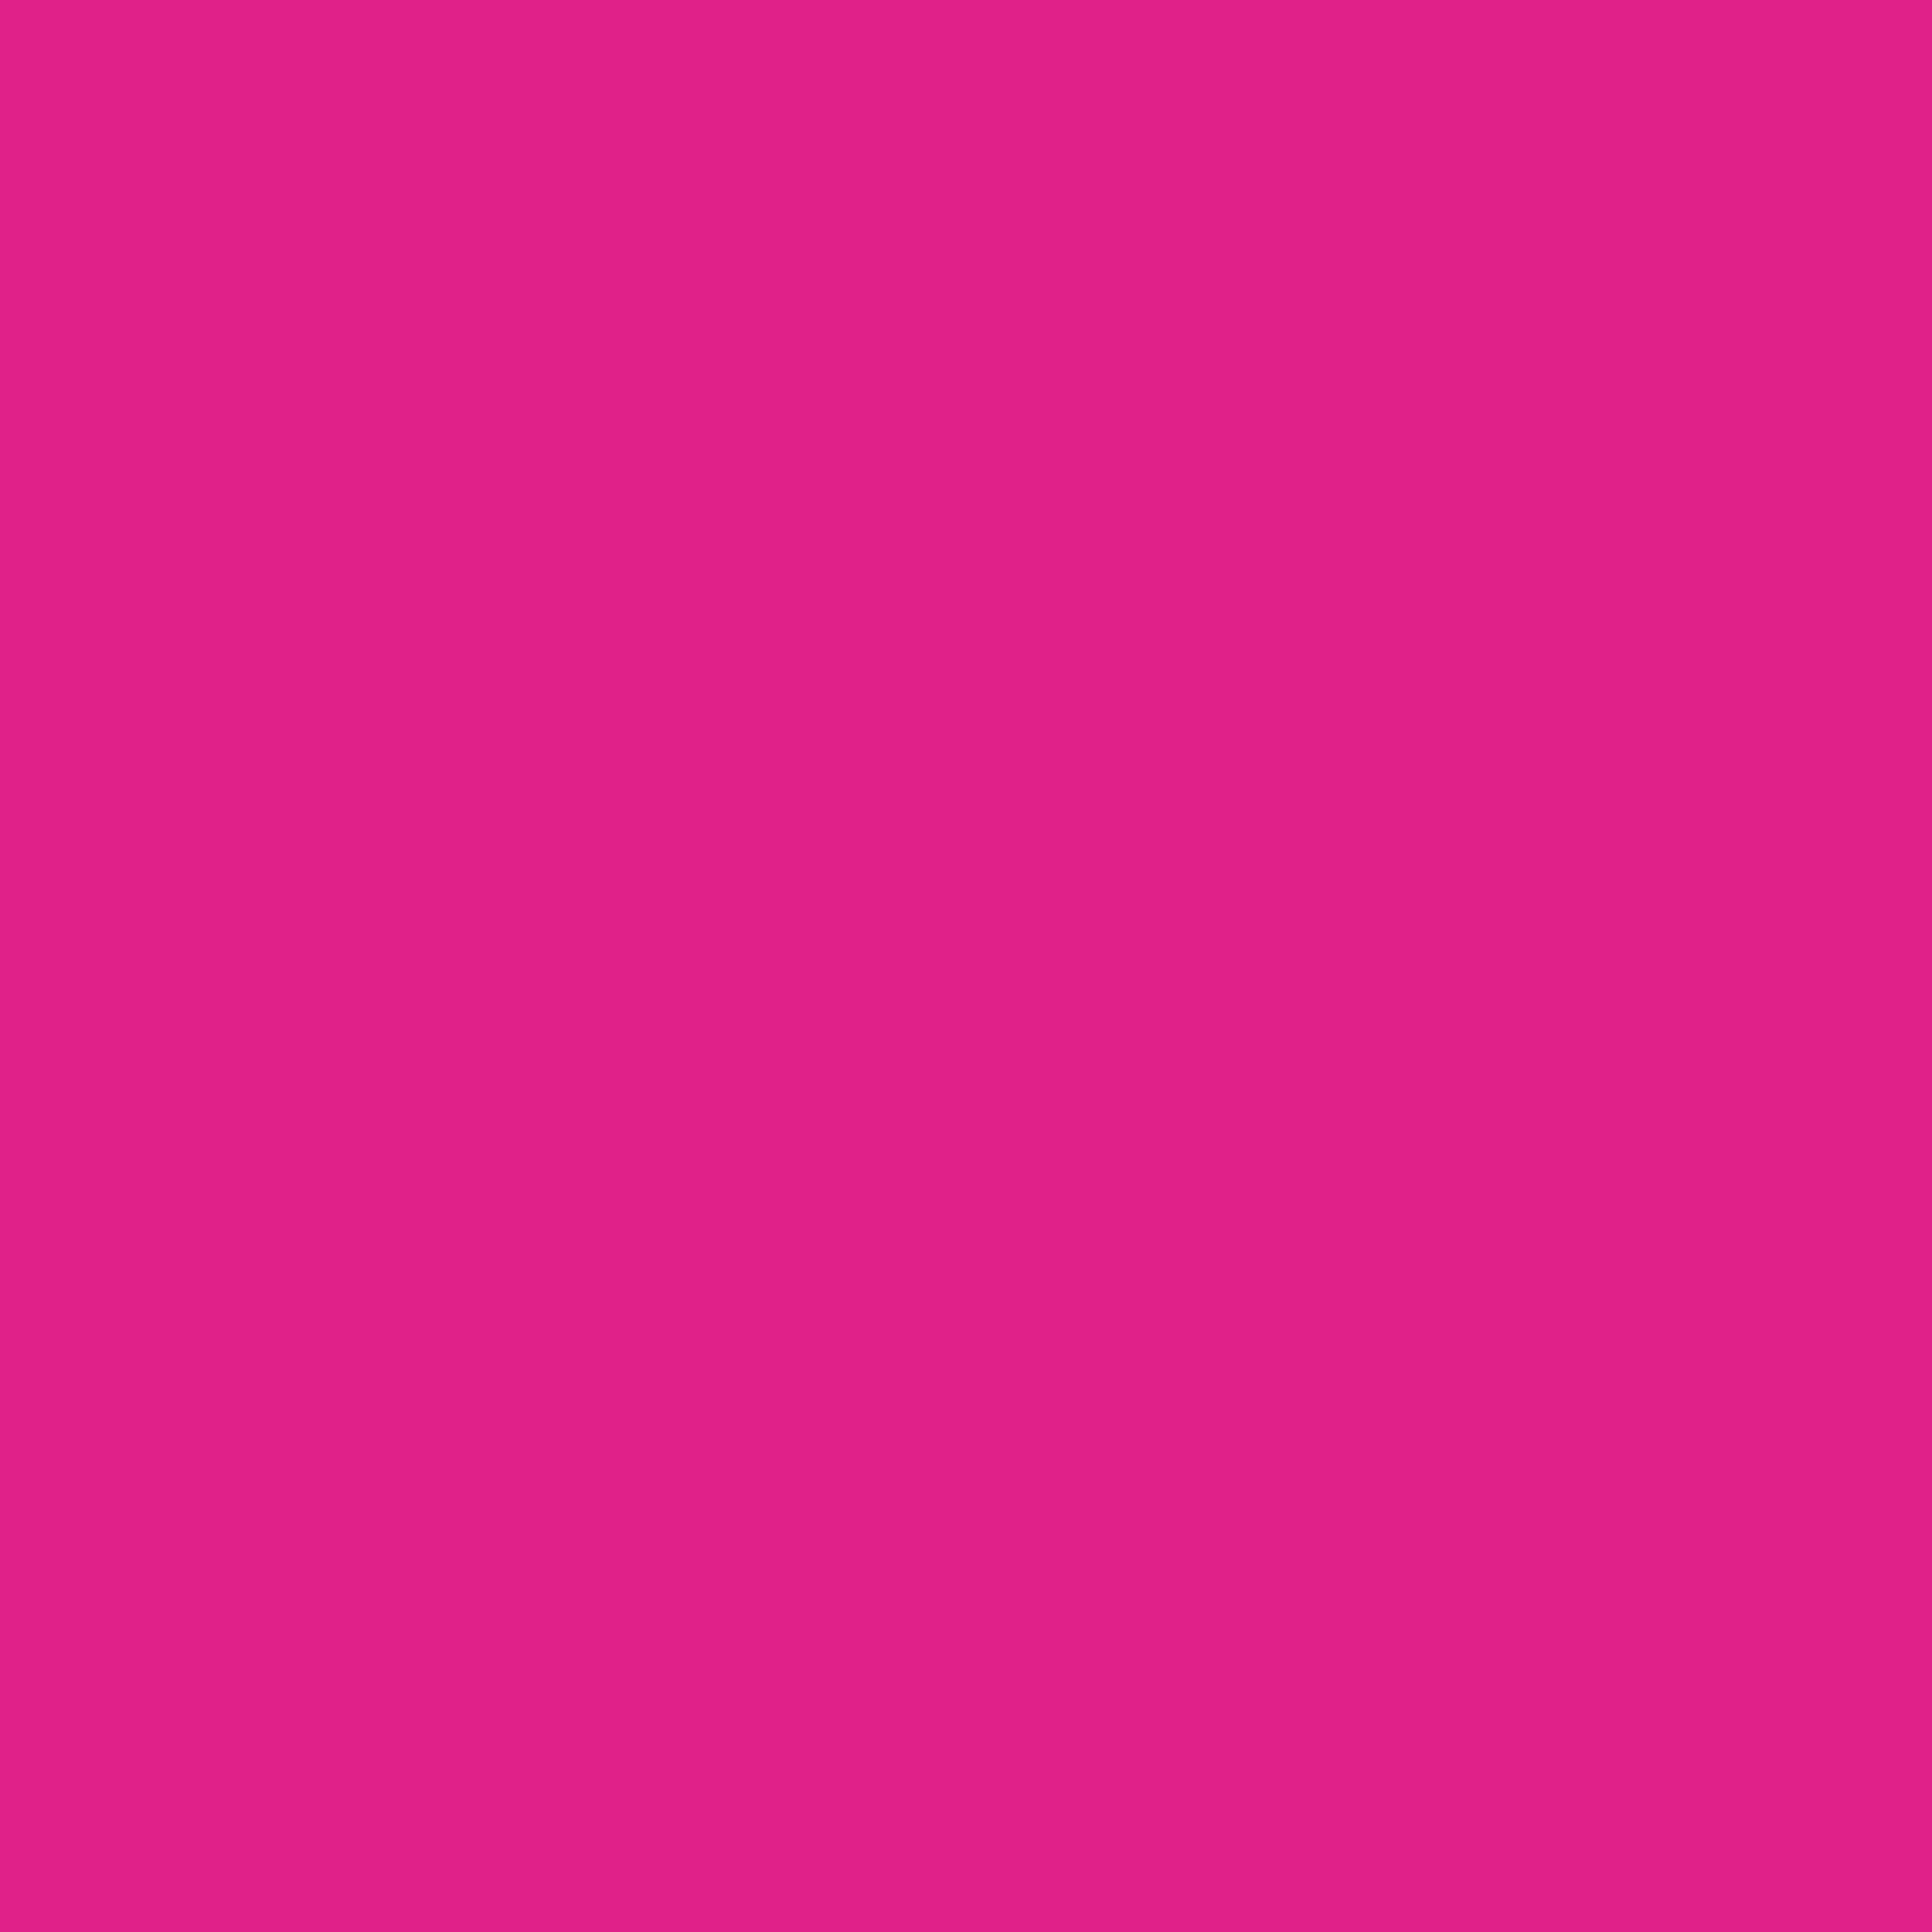 2732x2732 Barbie Pink Solid Color Background